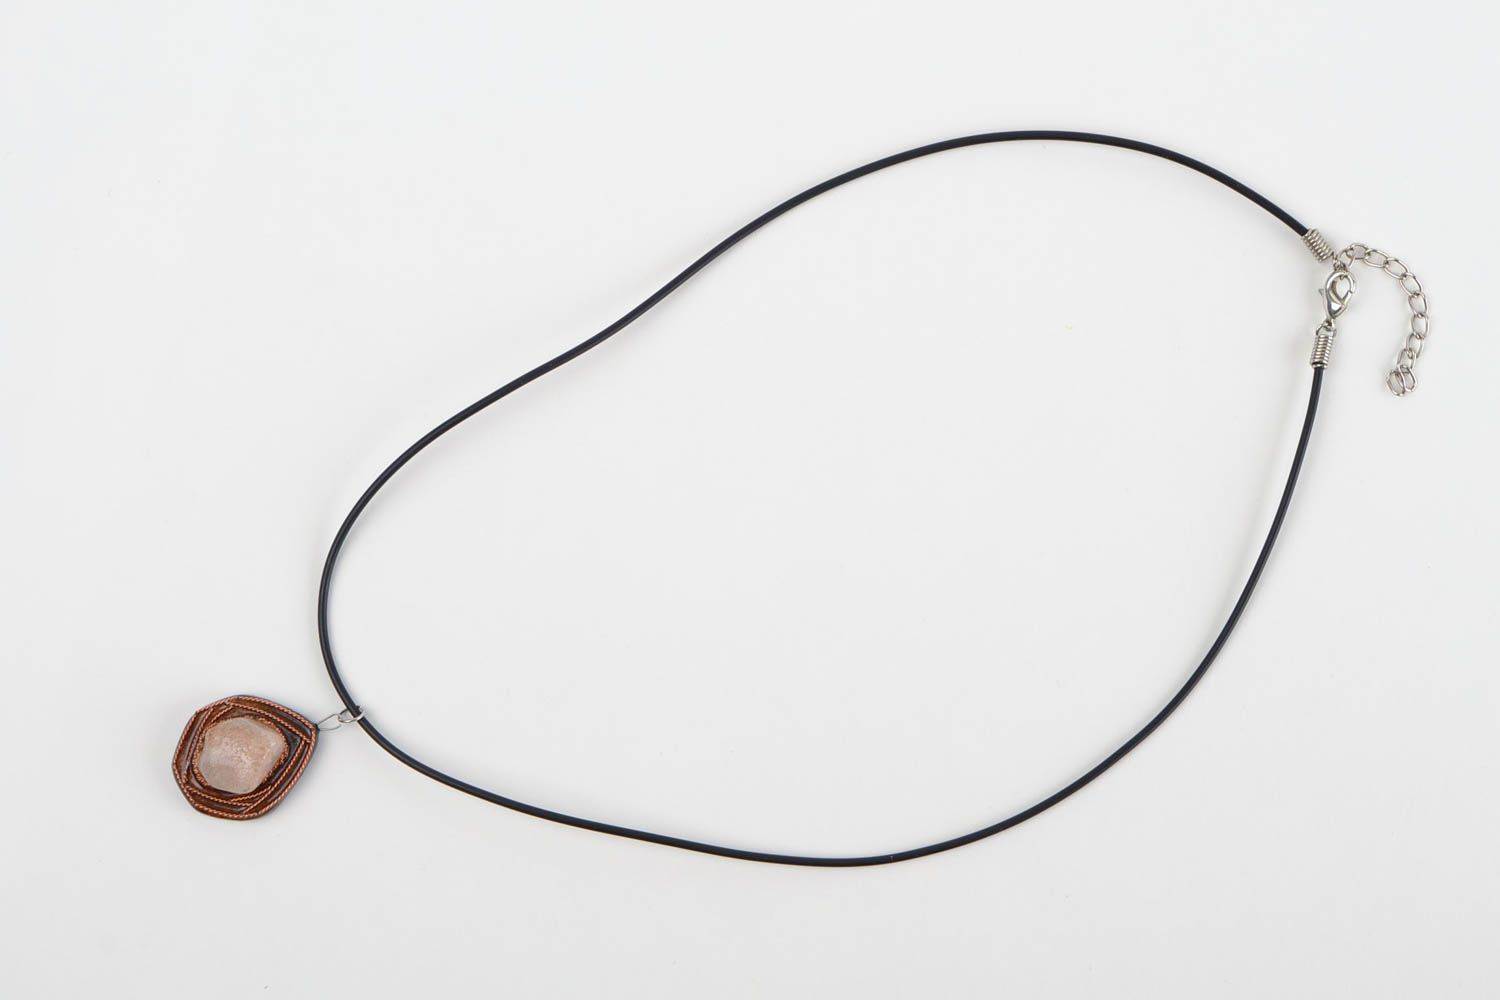 Handmade wooden pendant jewelry with natural stone stylish pendant gift photo 4